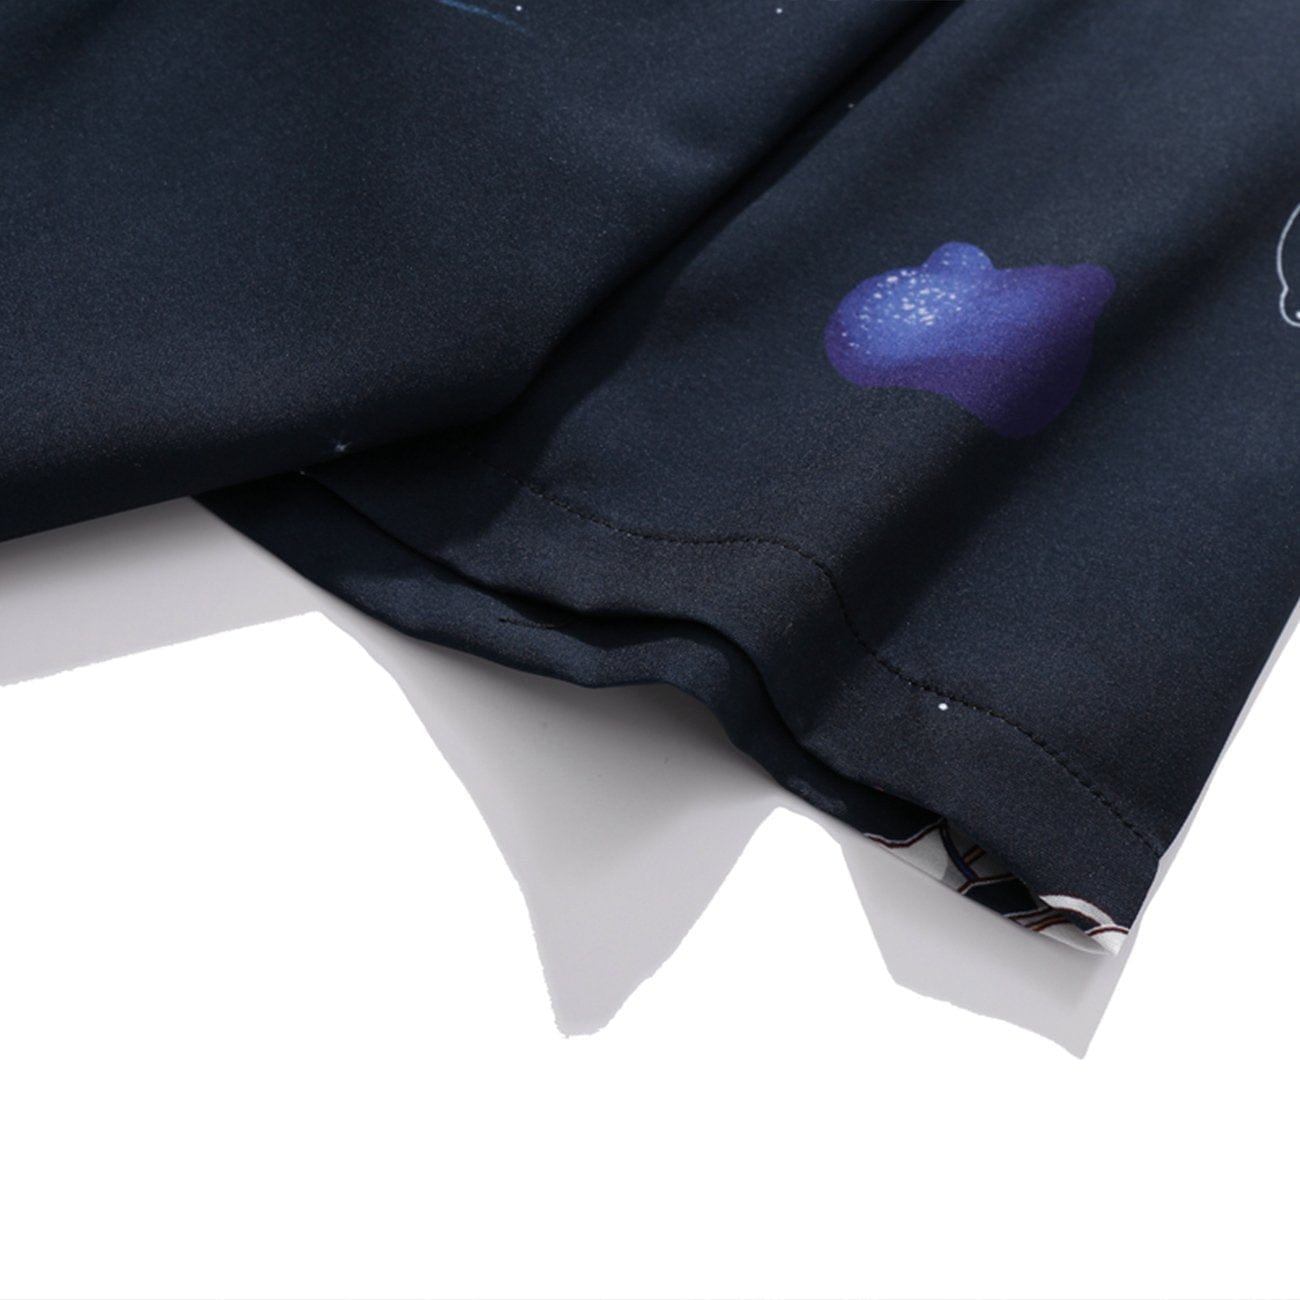 Cosmic Space Cat Shirt